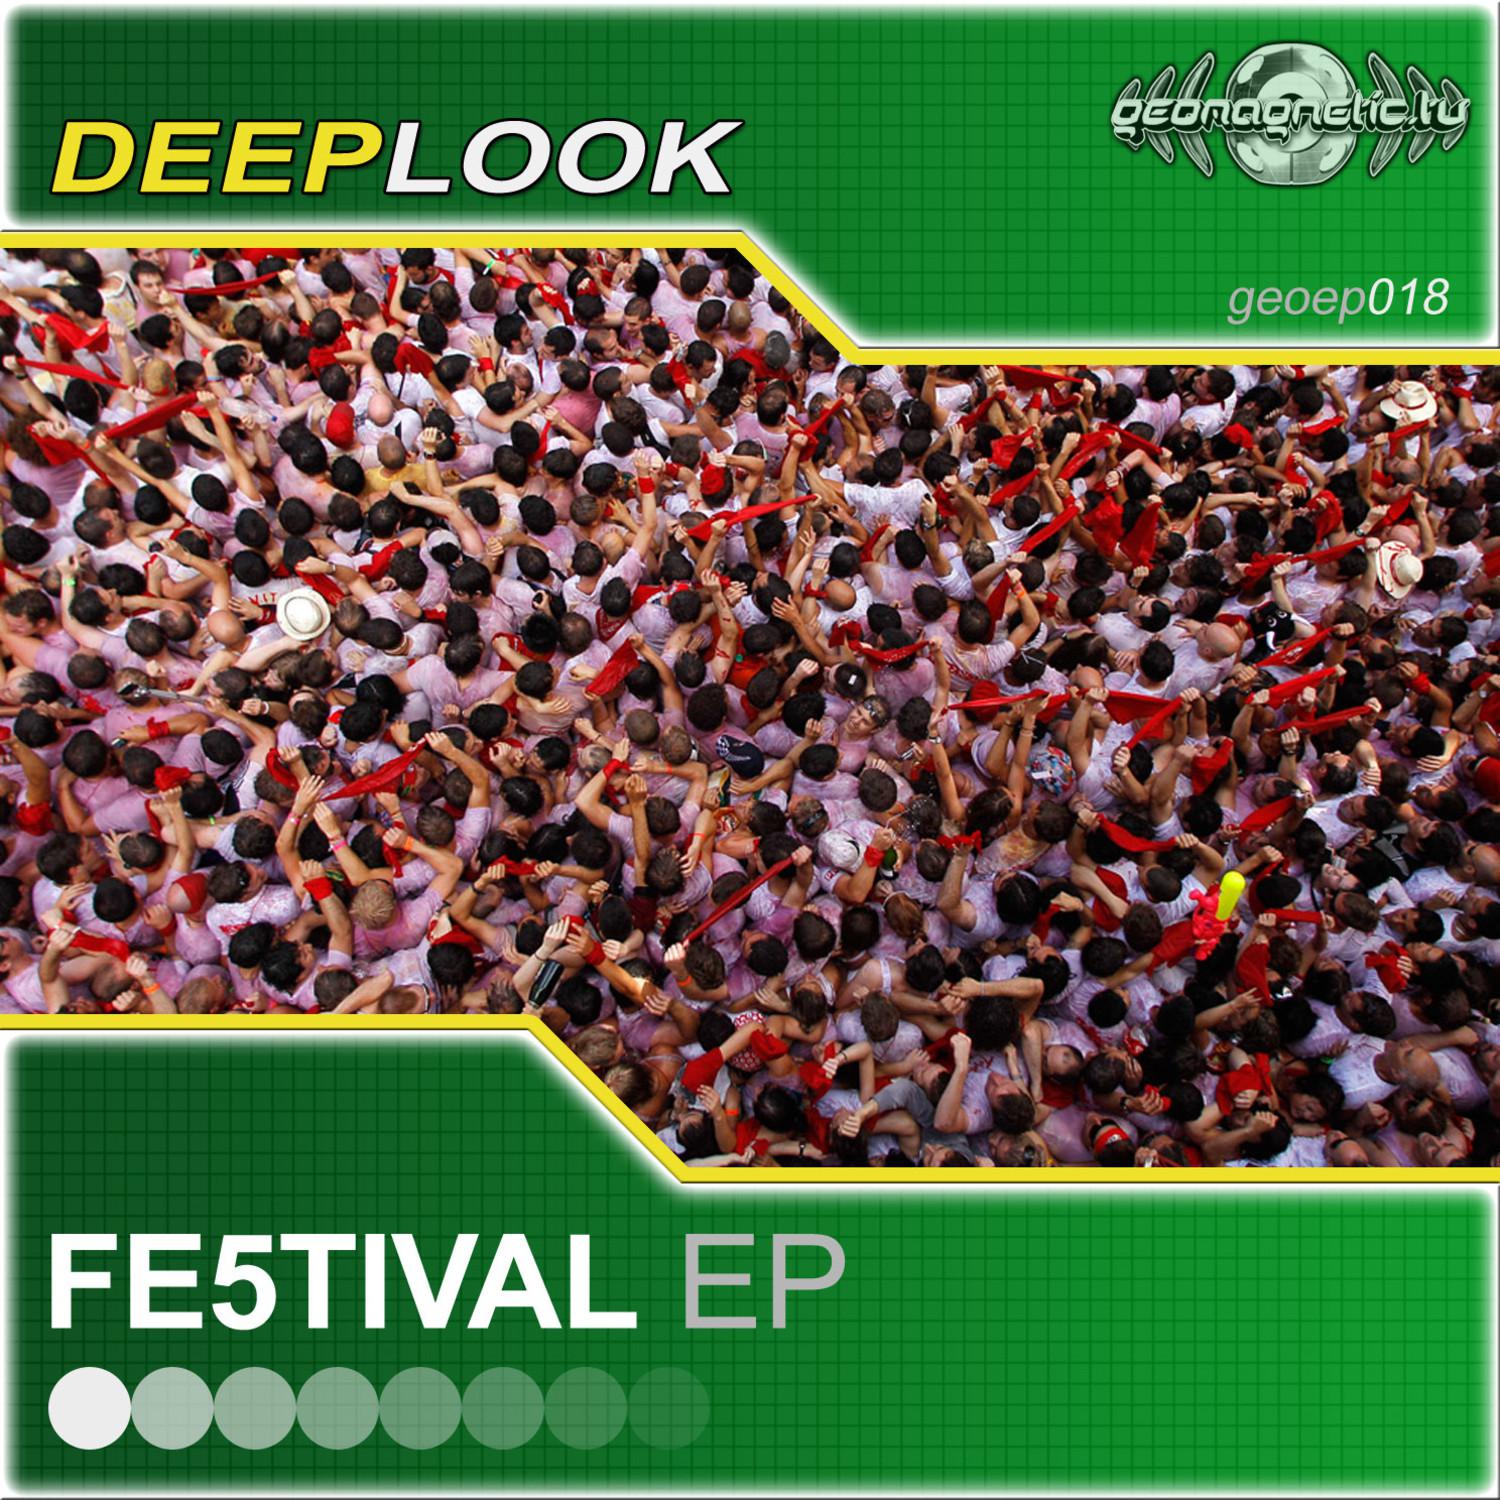 Deeplook - Fe5tival EP